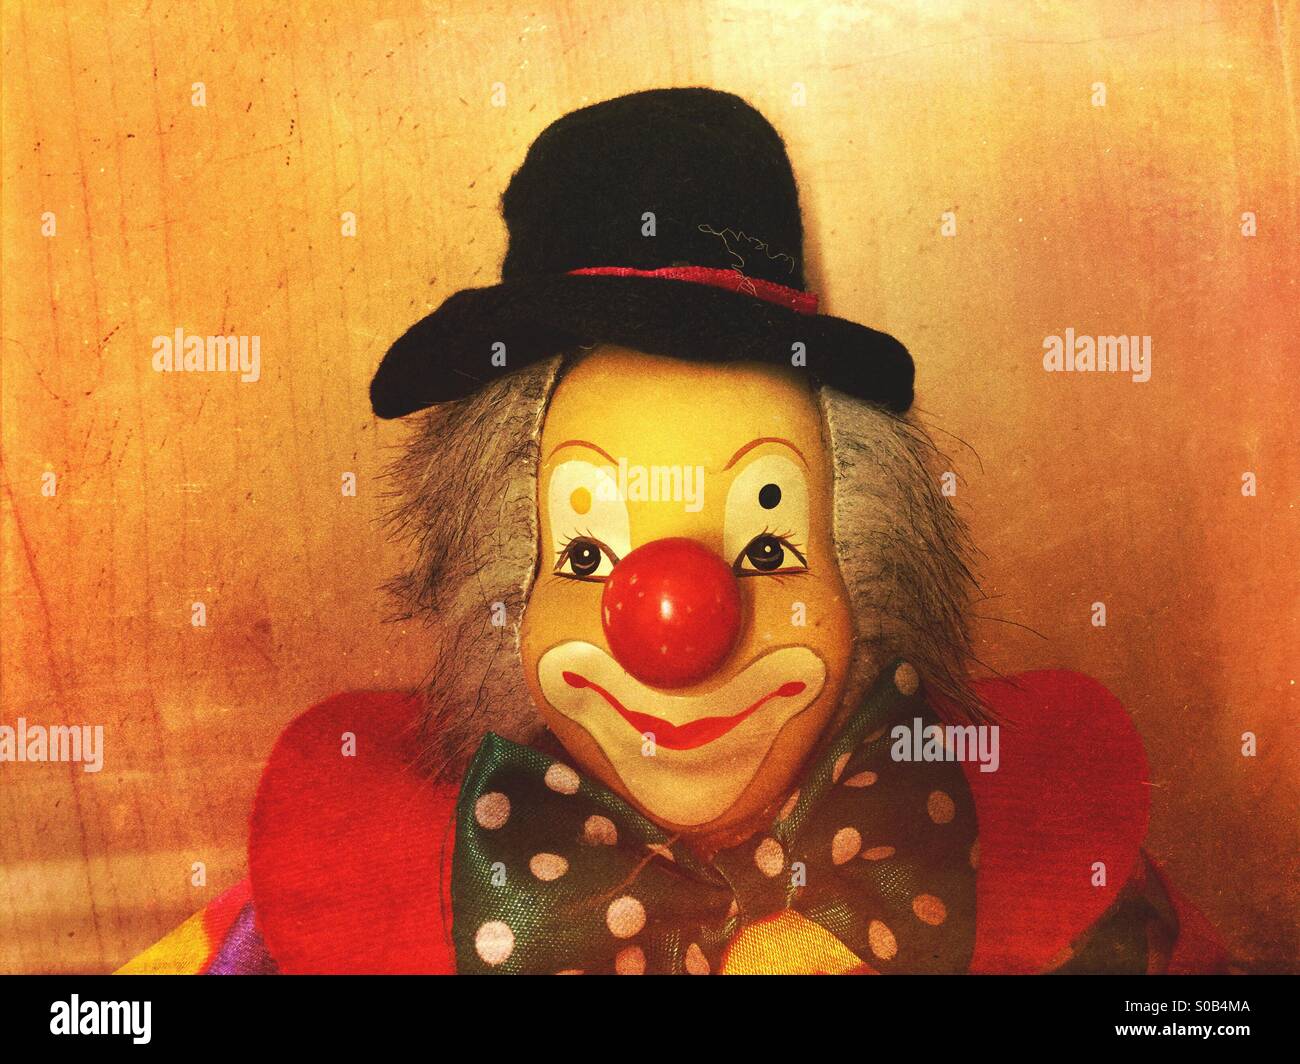 Vintage clown doll Stock Photo